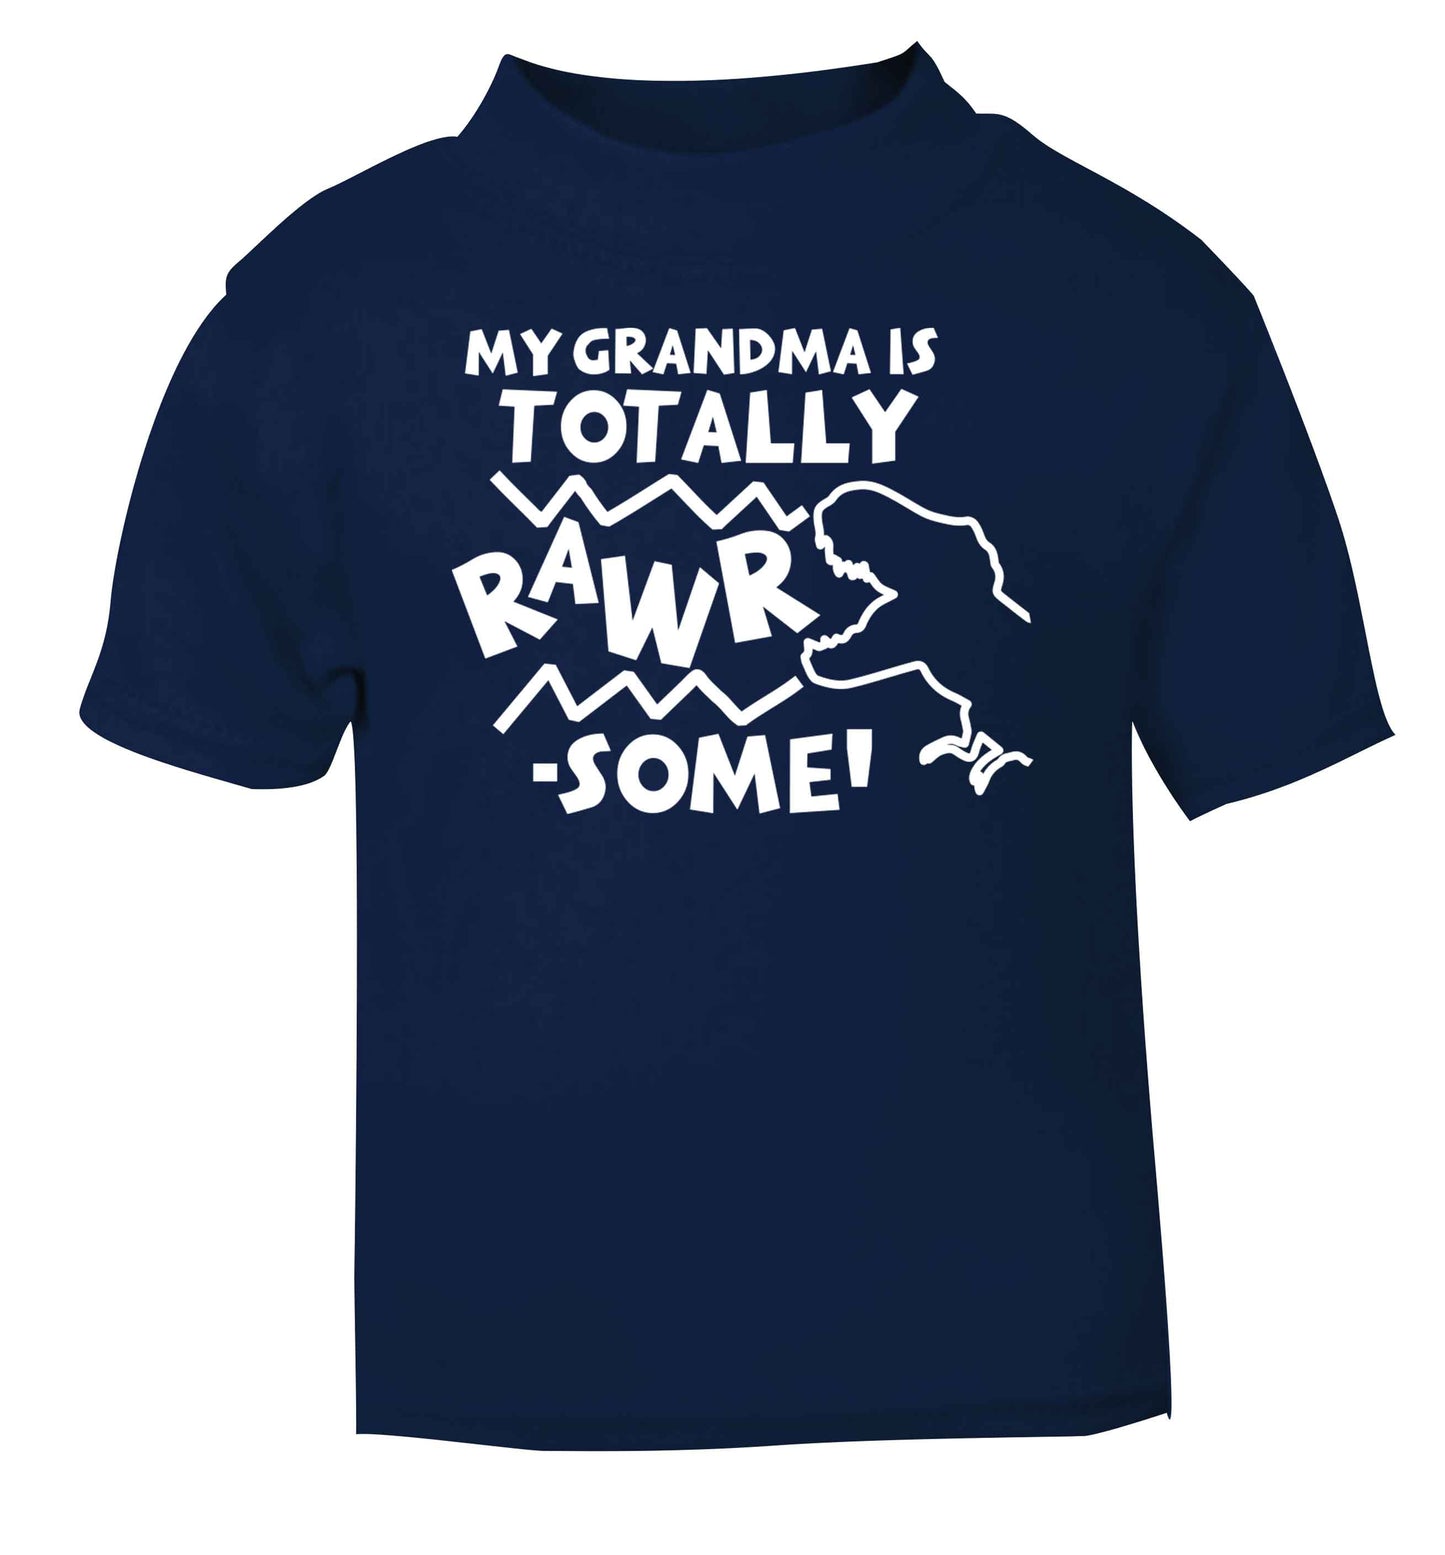 My grandma is totally rawrsome navy baby toddler Tshirt 2 Years